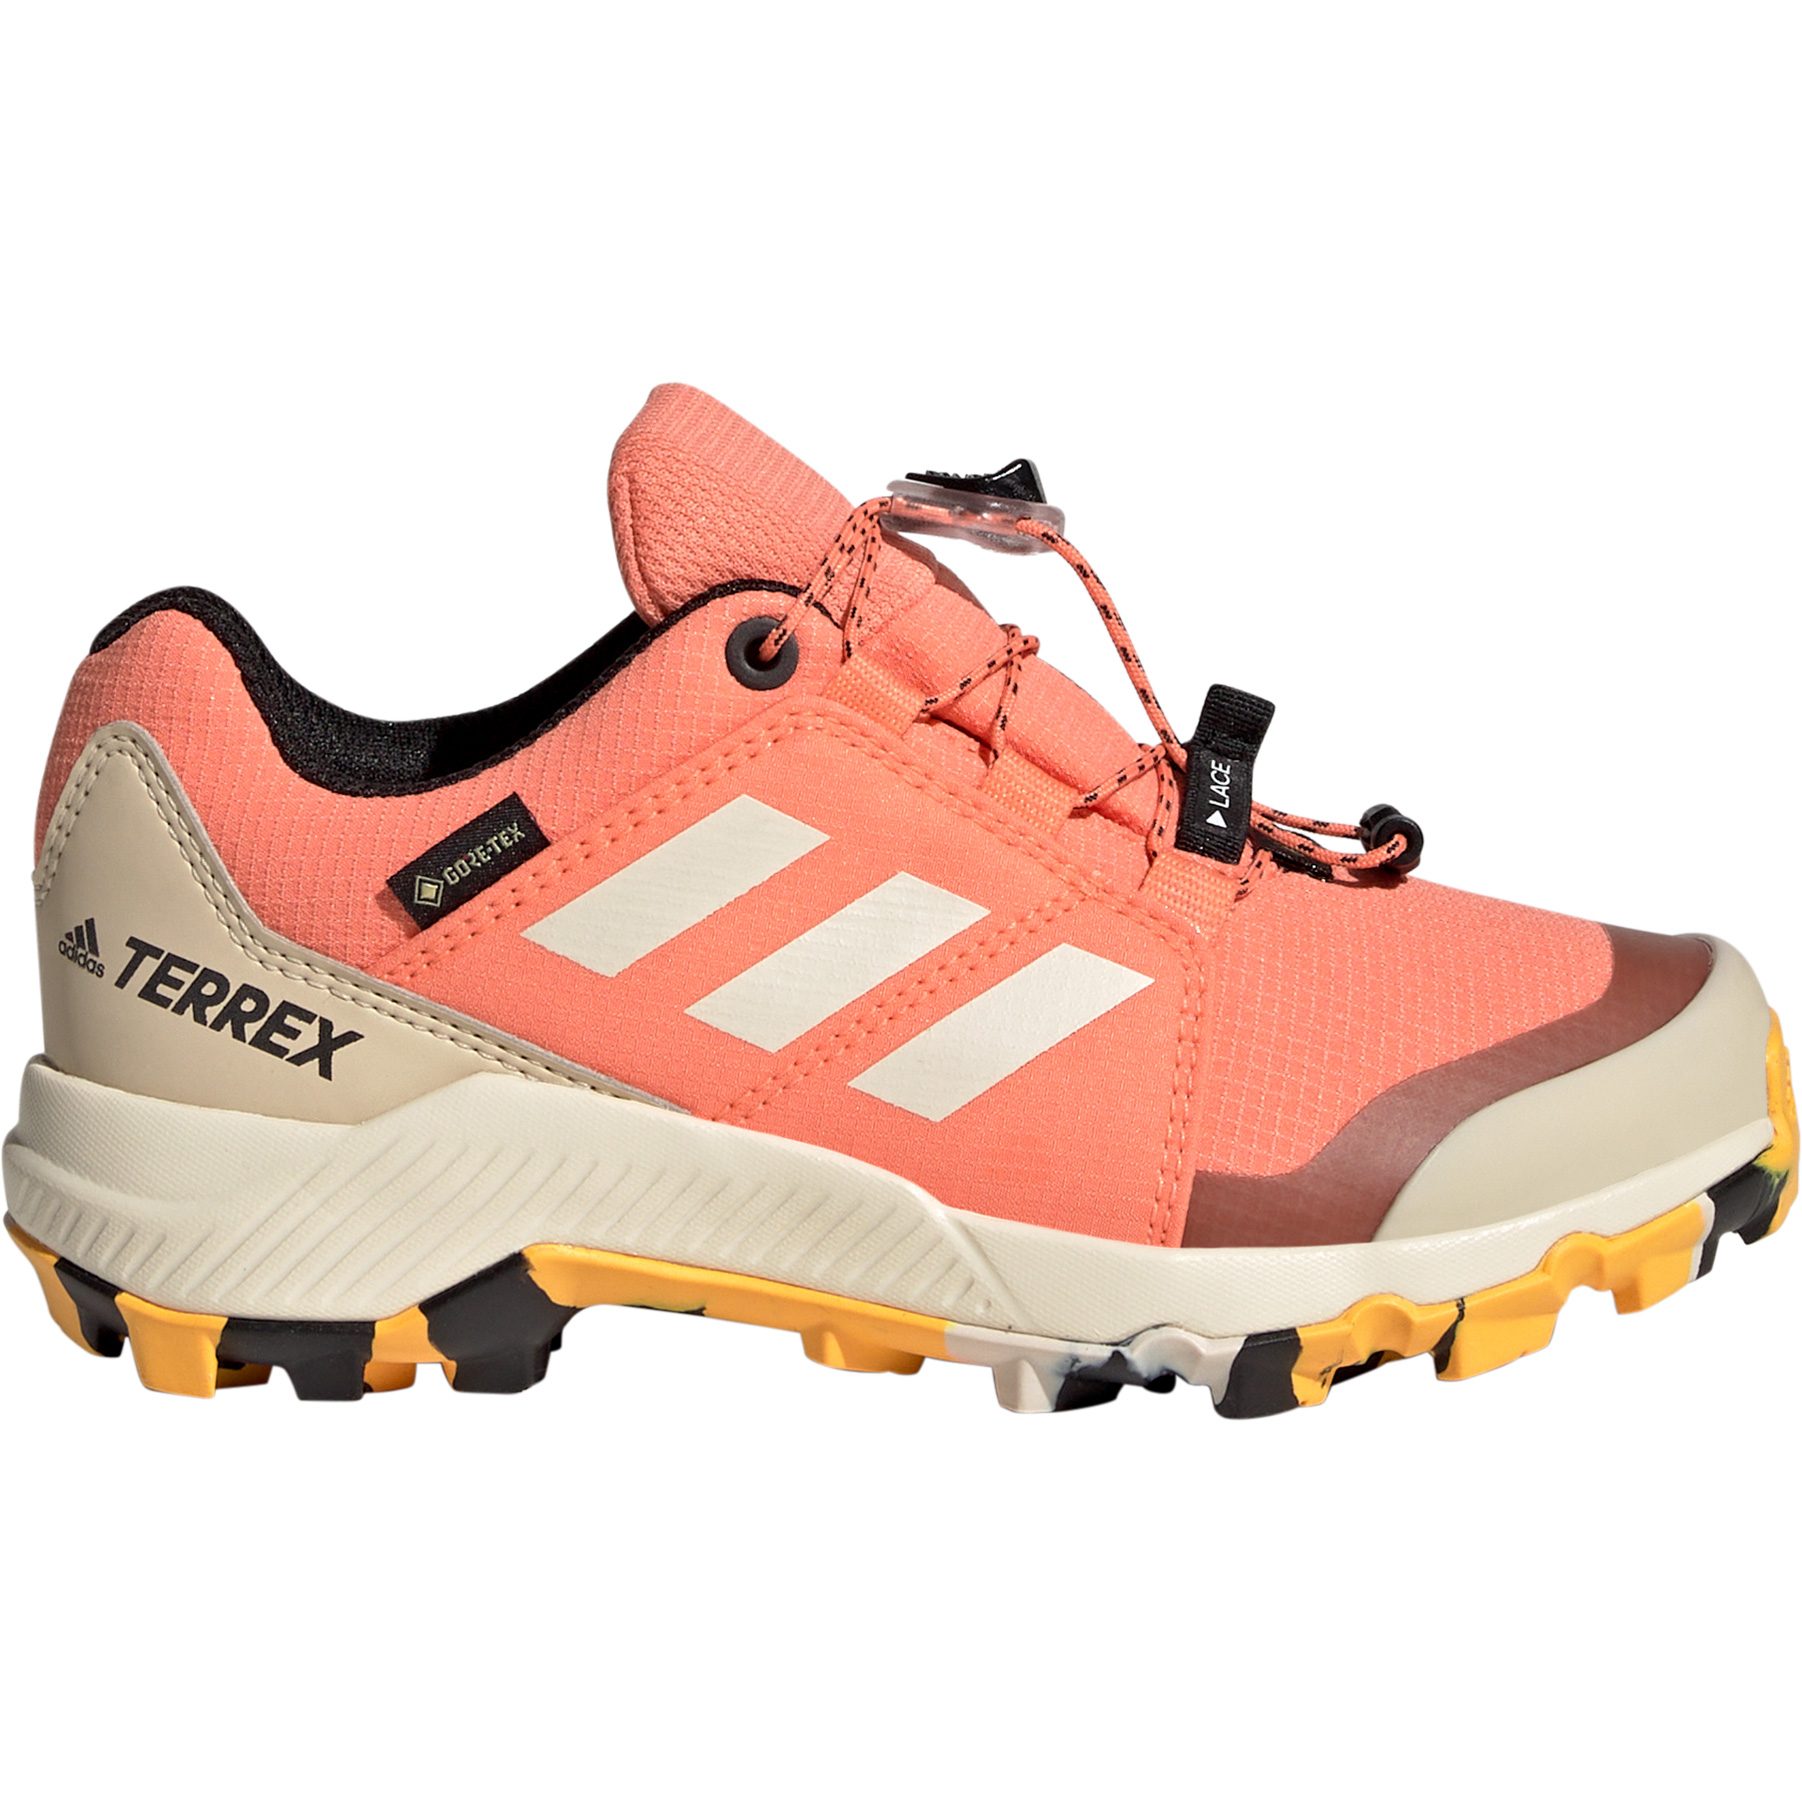 adidas TERREX - GORE-TEX® fusion Kids Shoes Shop Bittl Hiking Sport Terrex coral at